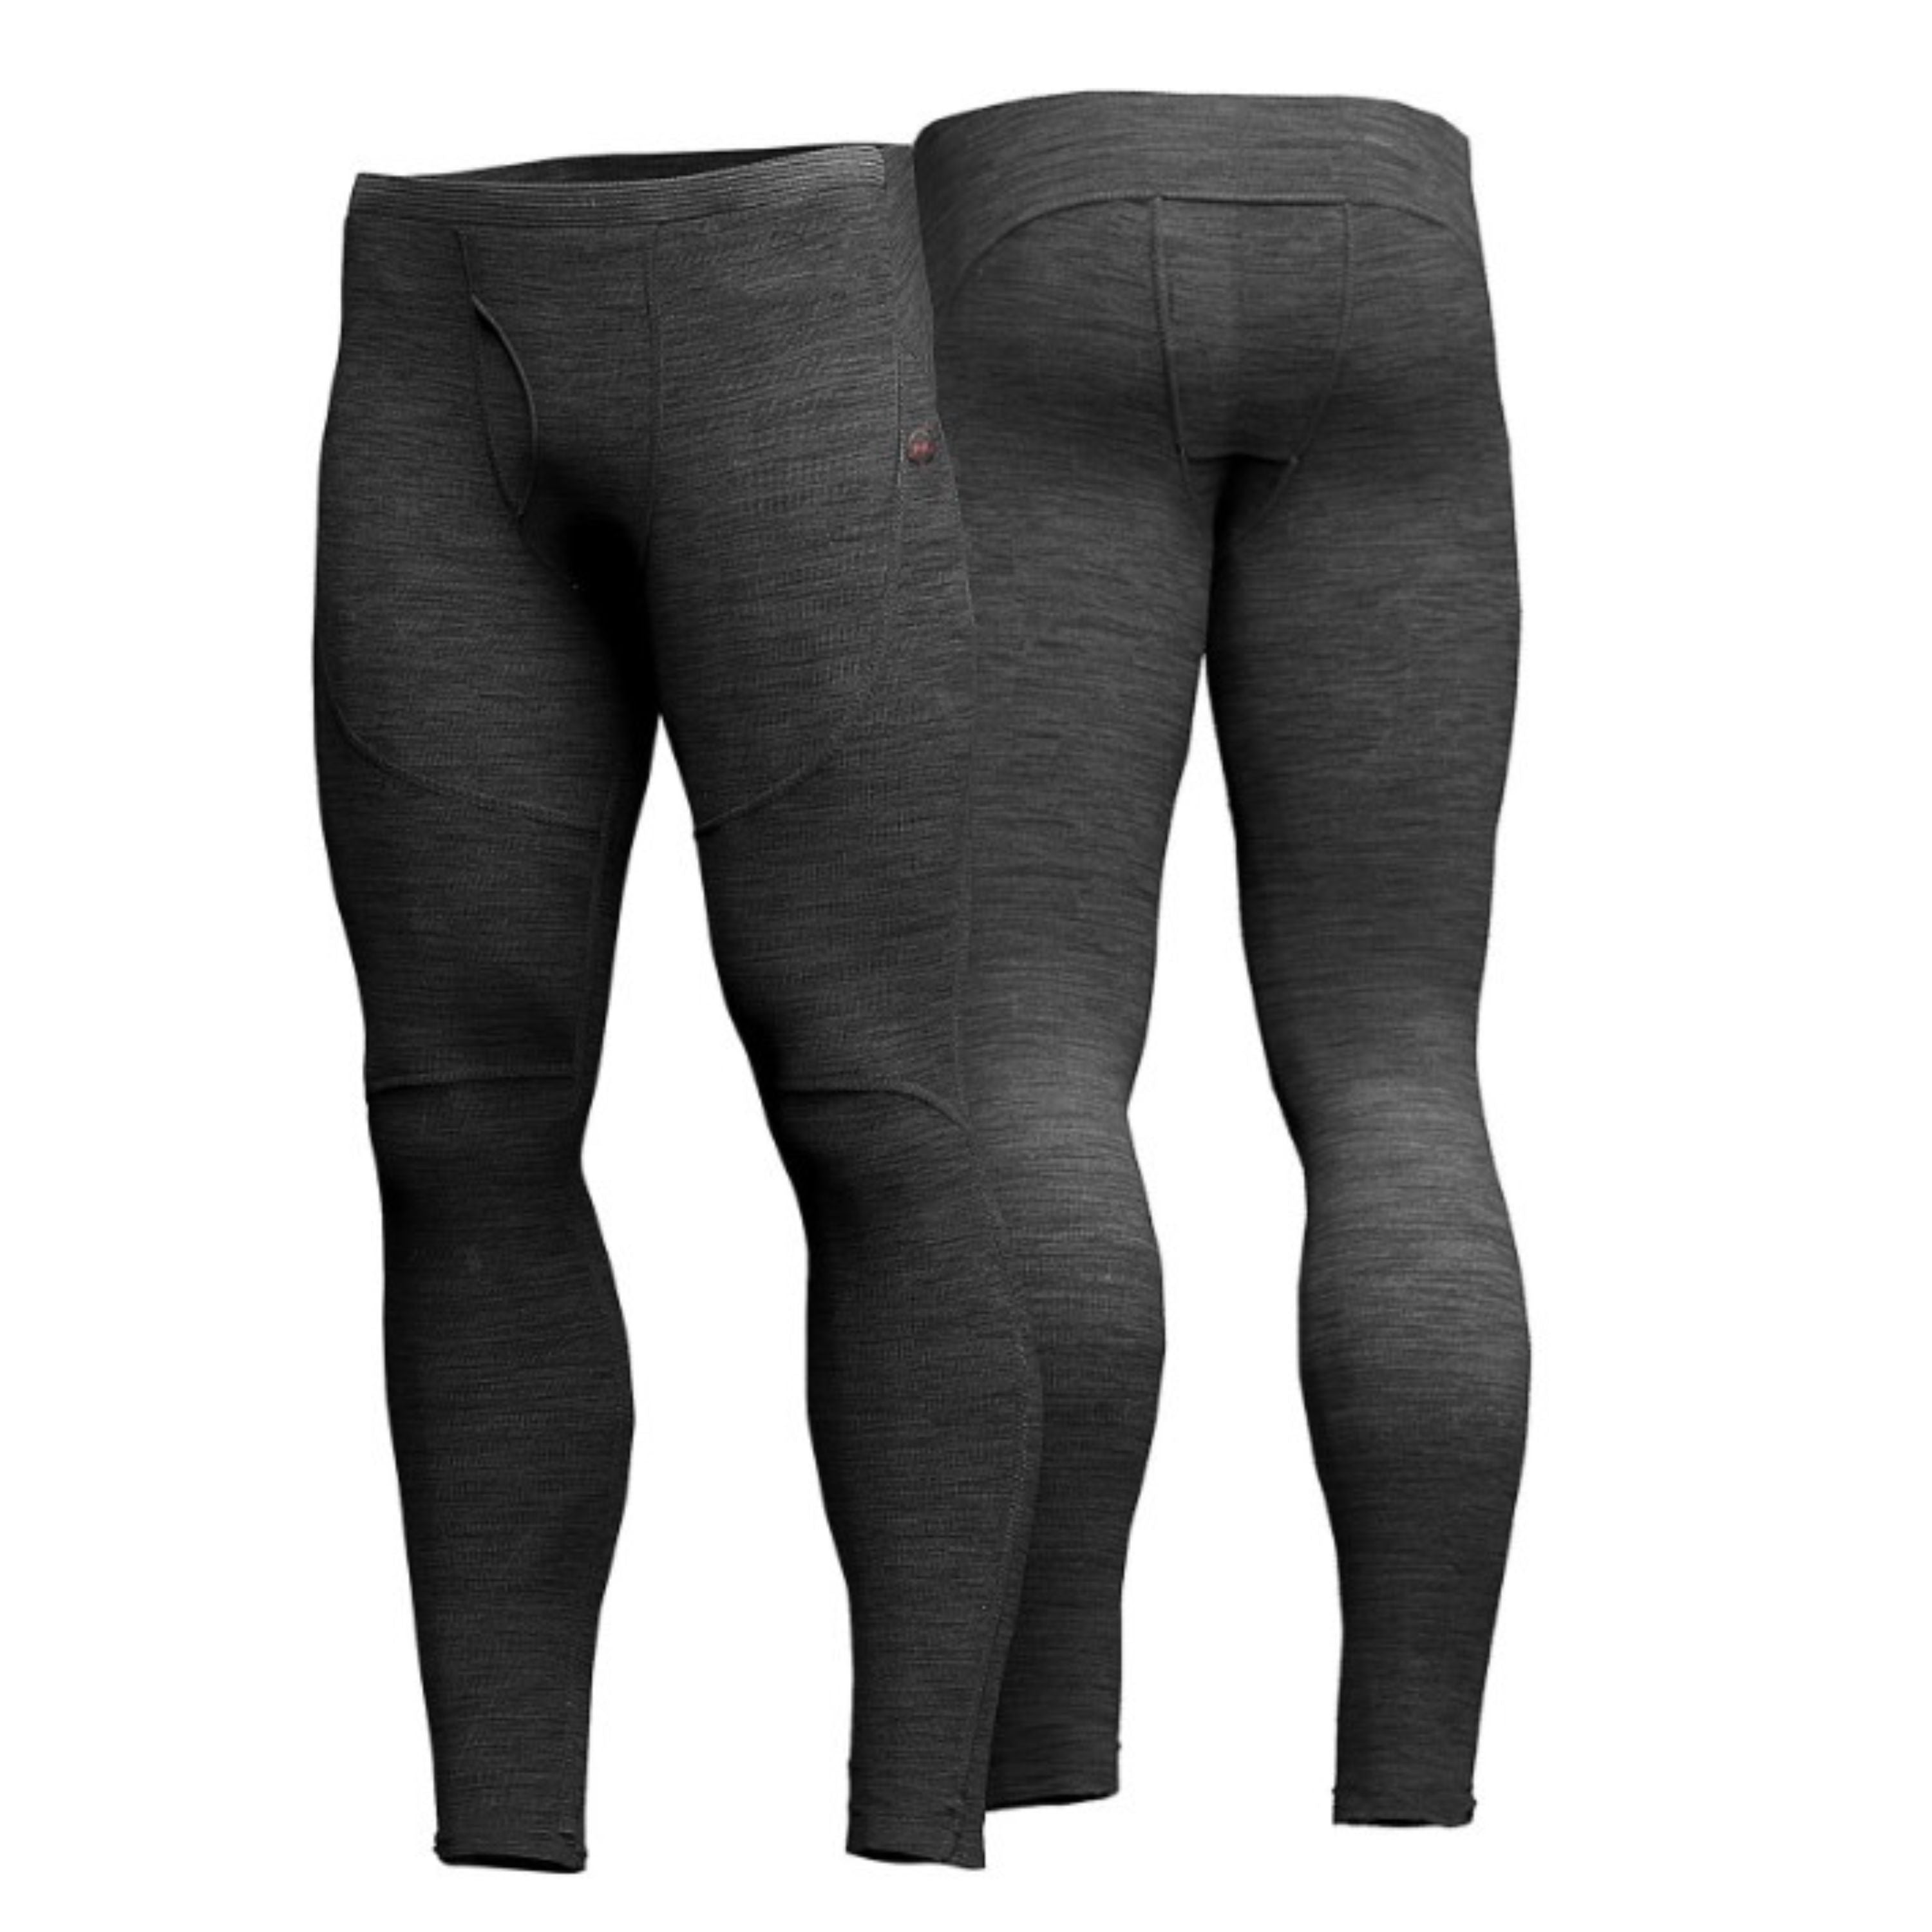 Pantalon sous-vêtement chauffant Primer 7,4V - Homme||Primer 7,4V  Heated base layer pant - Men’s